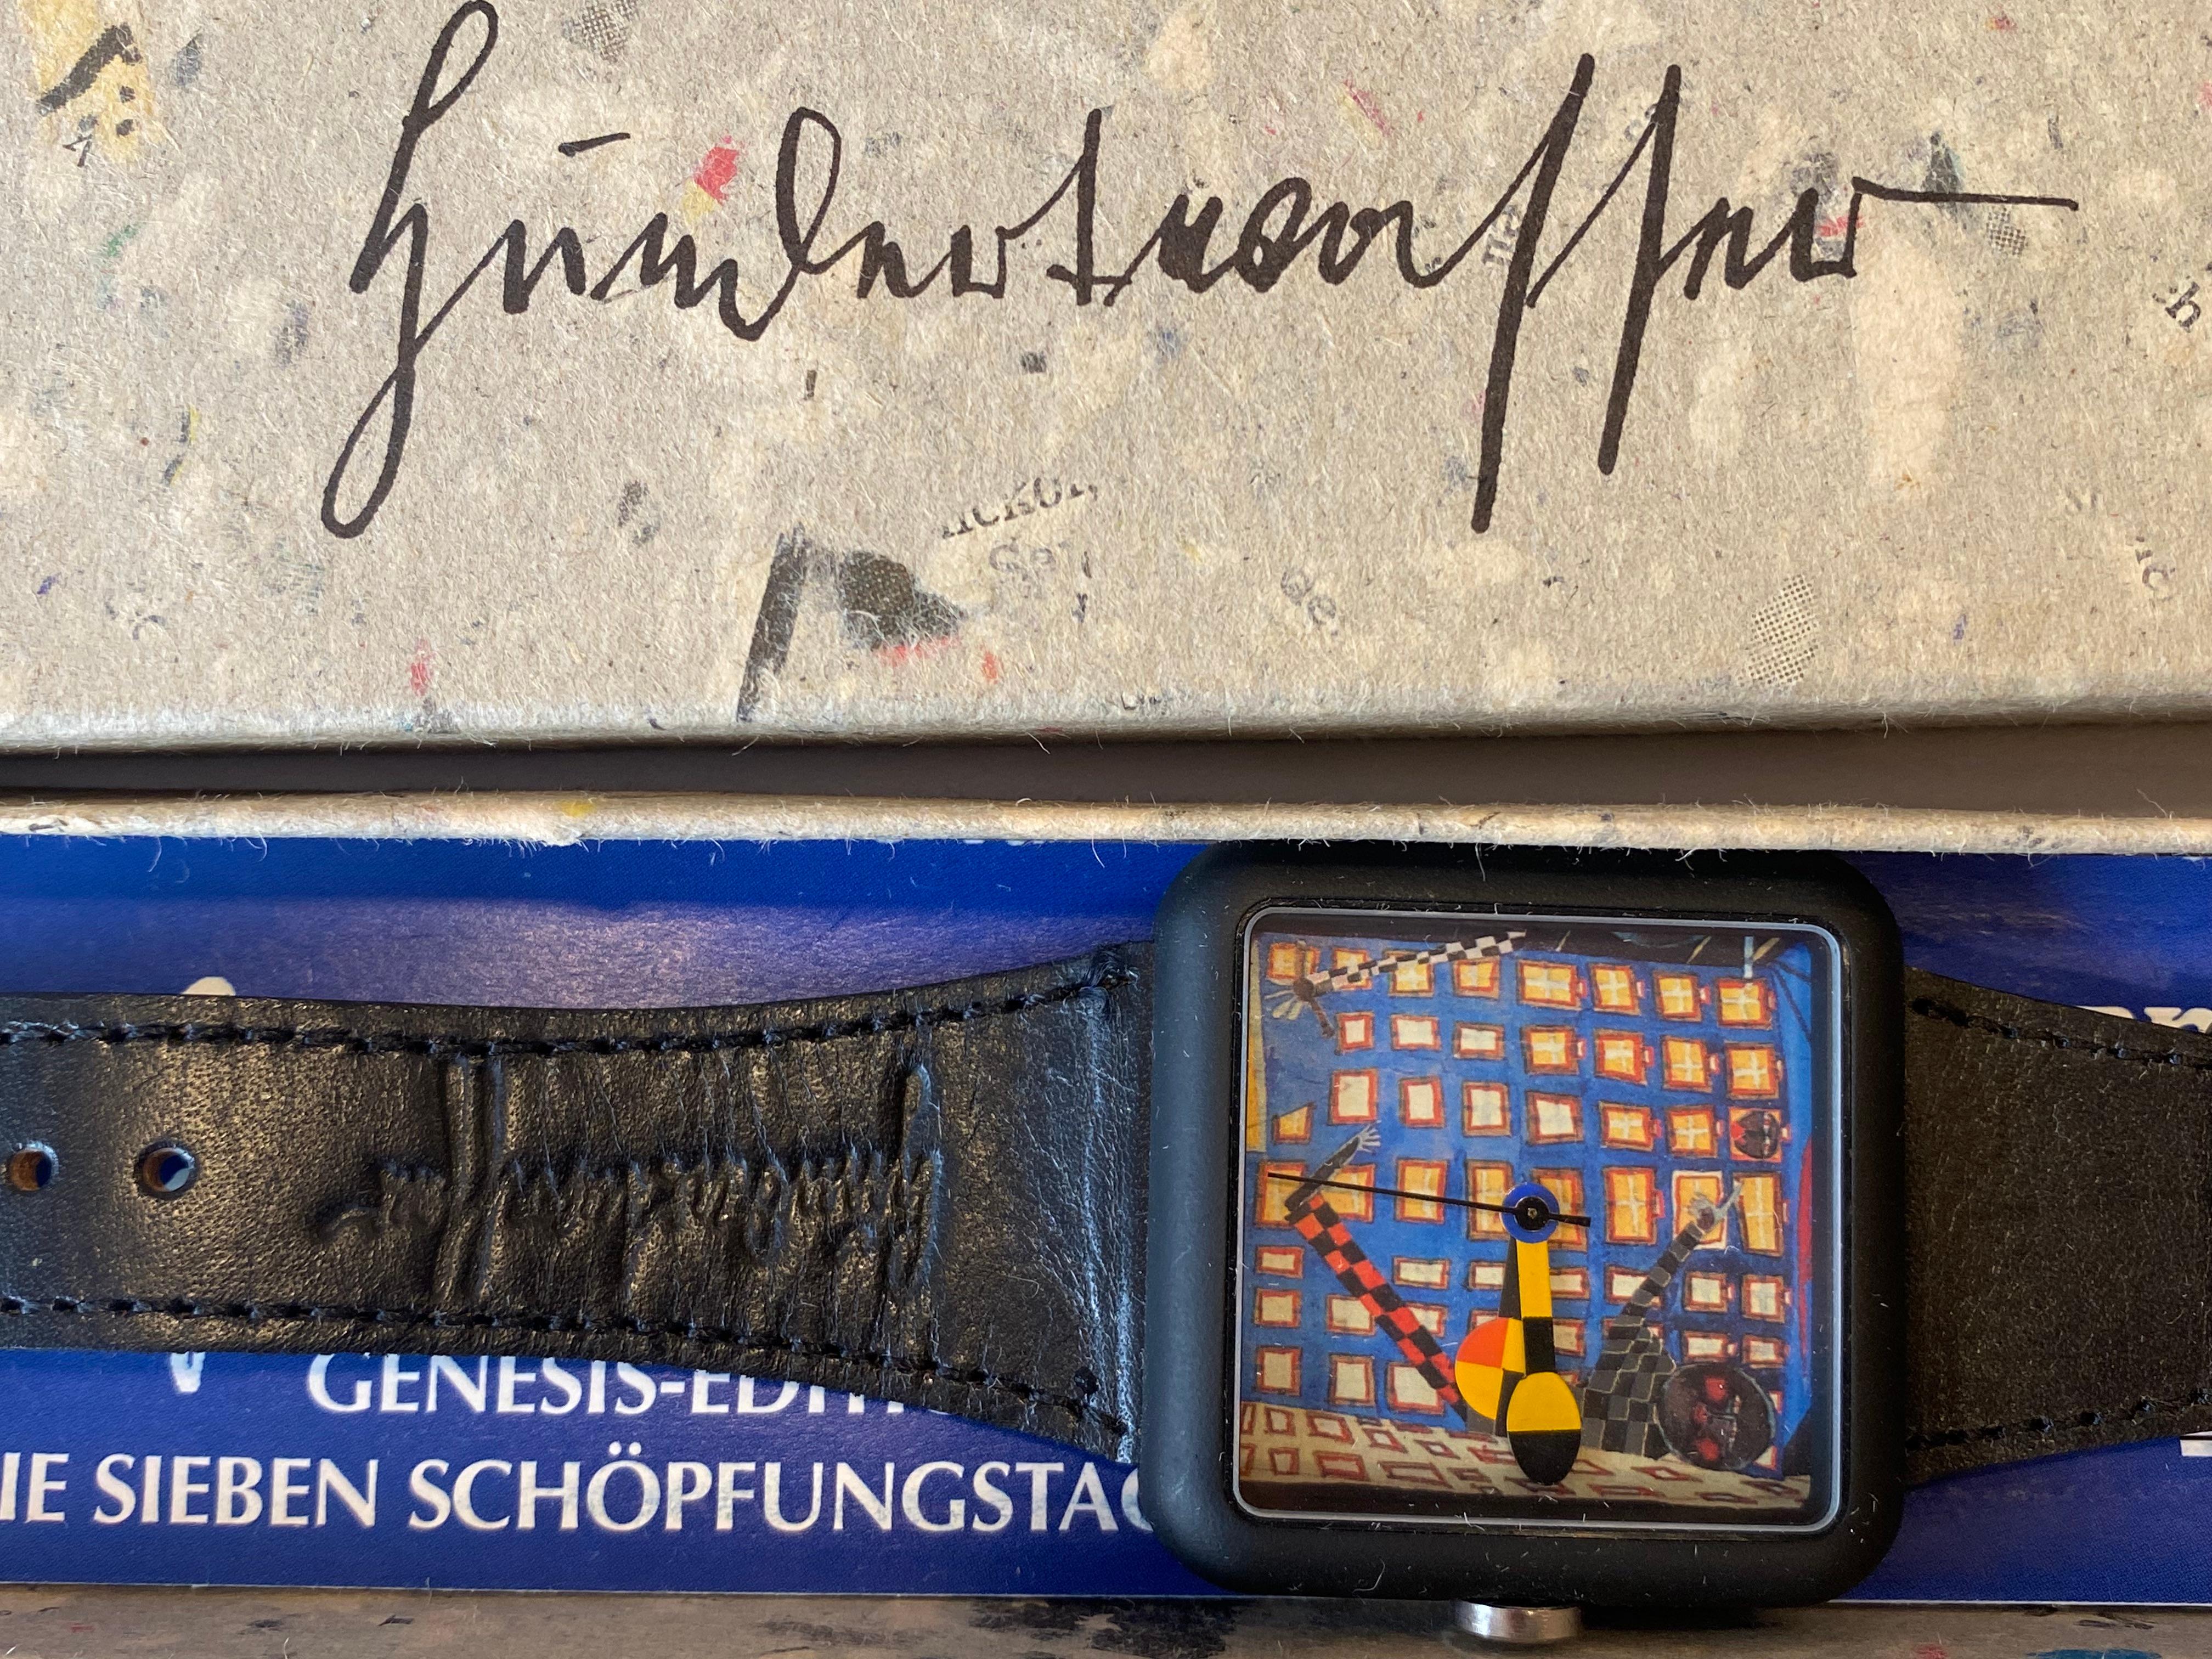 Watch Designed by the Austrian Artist Hundertwasser, 1995 For Sale 3